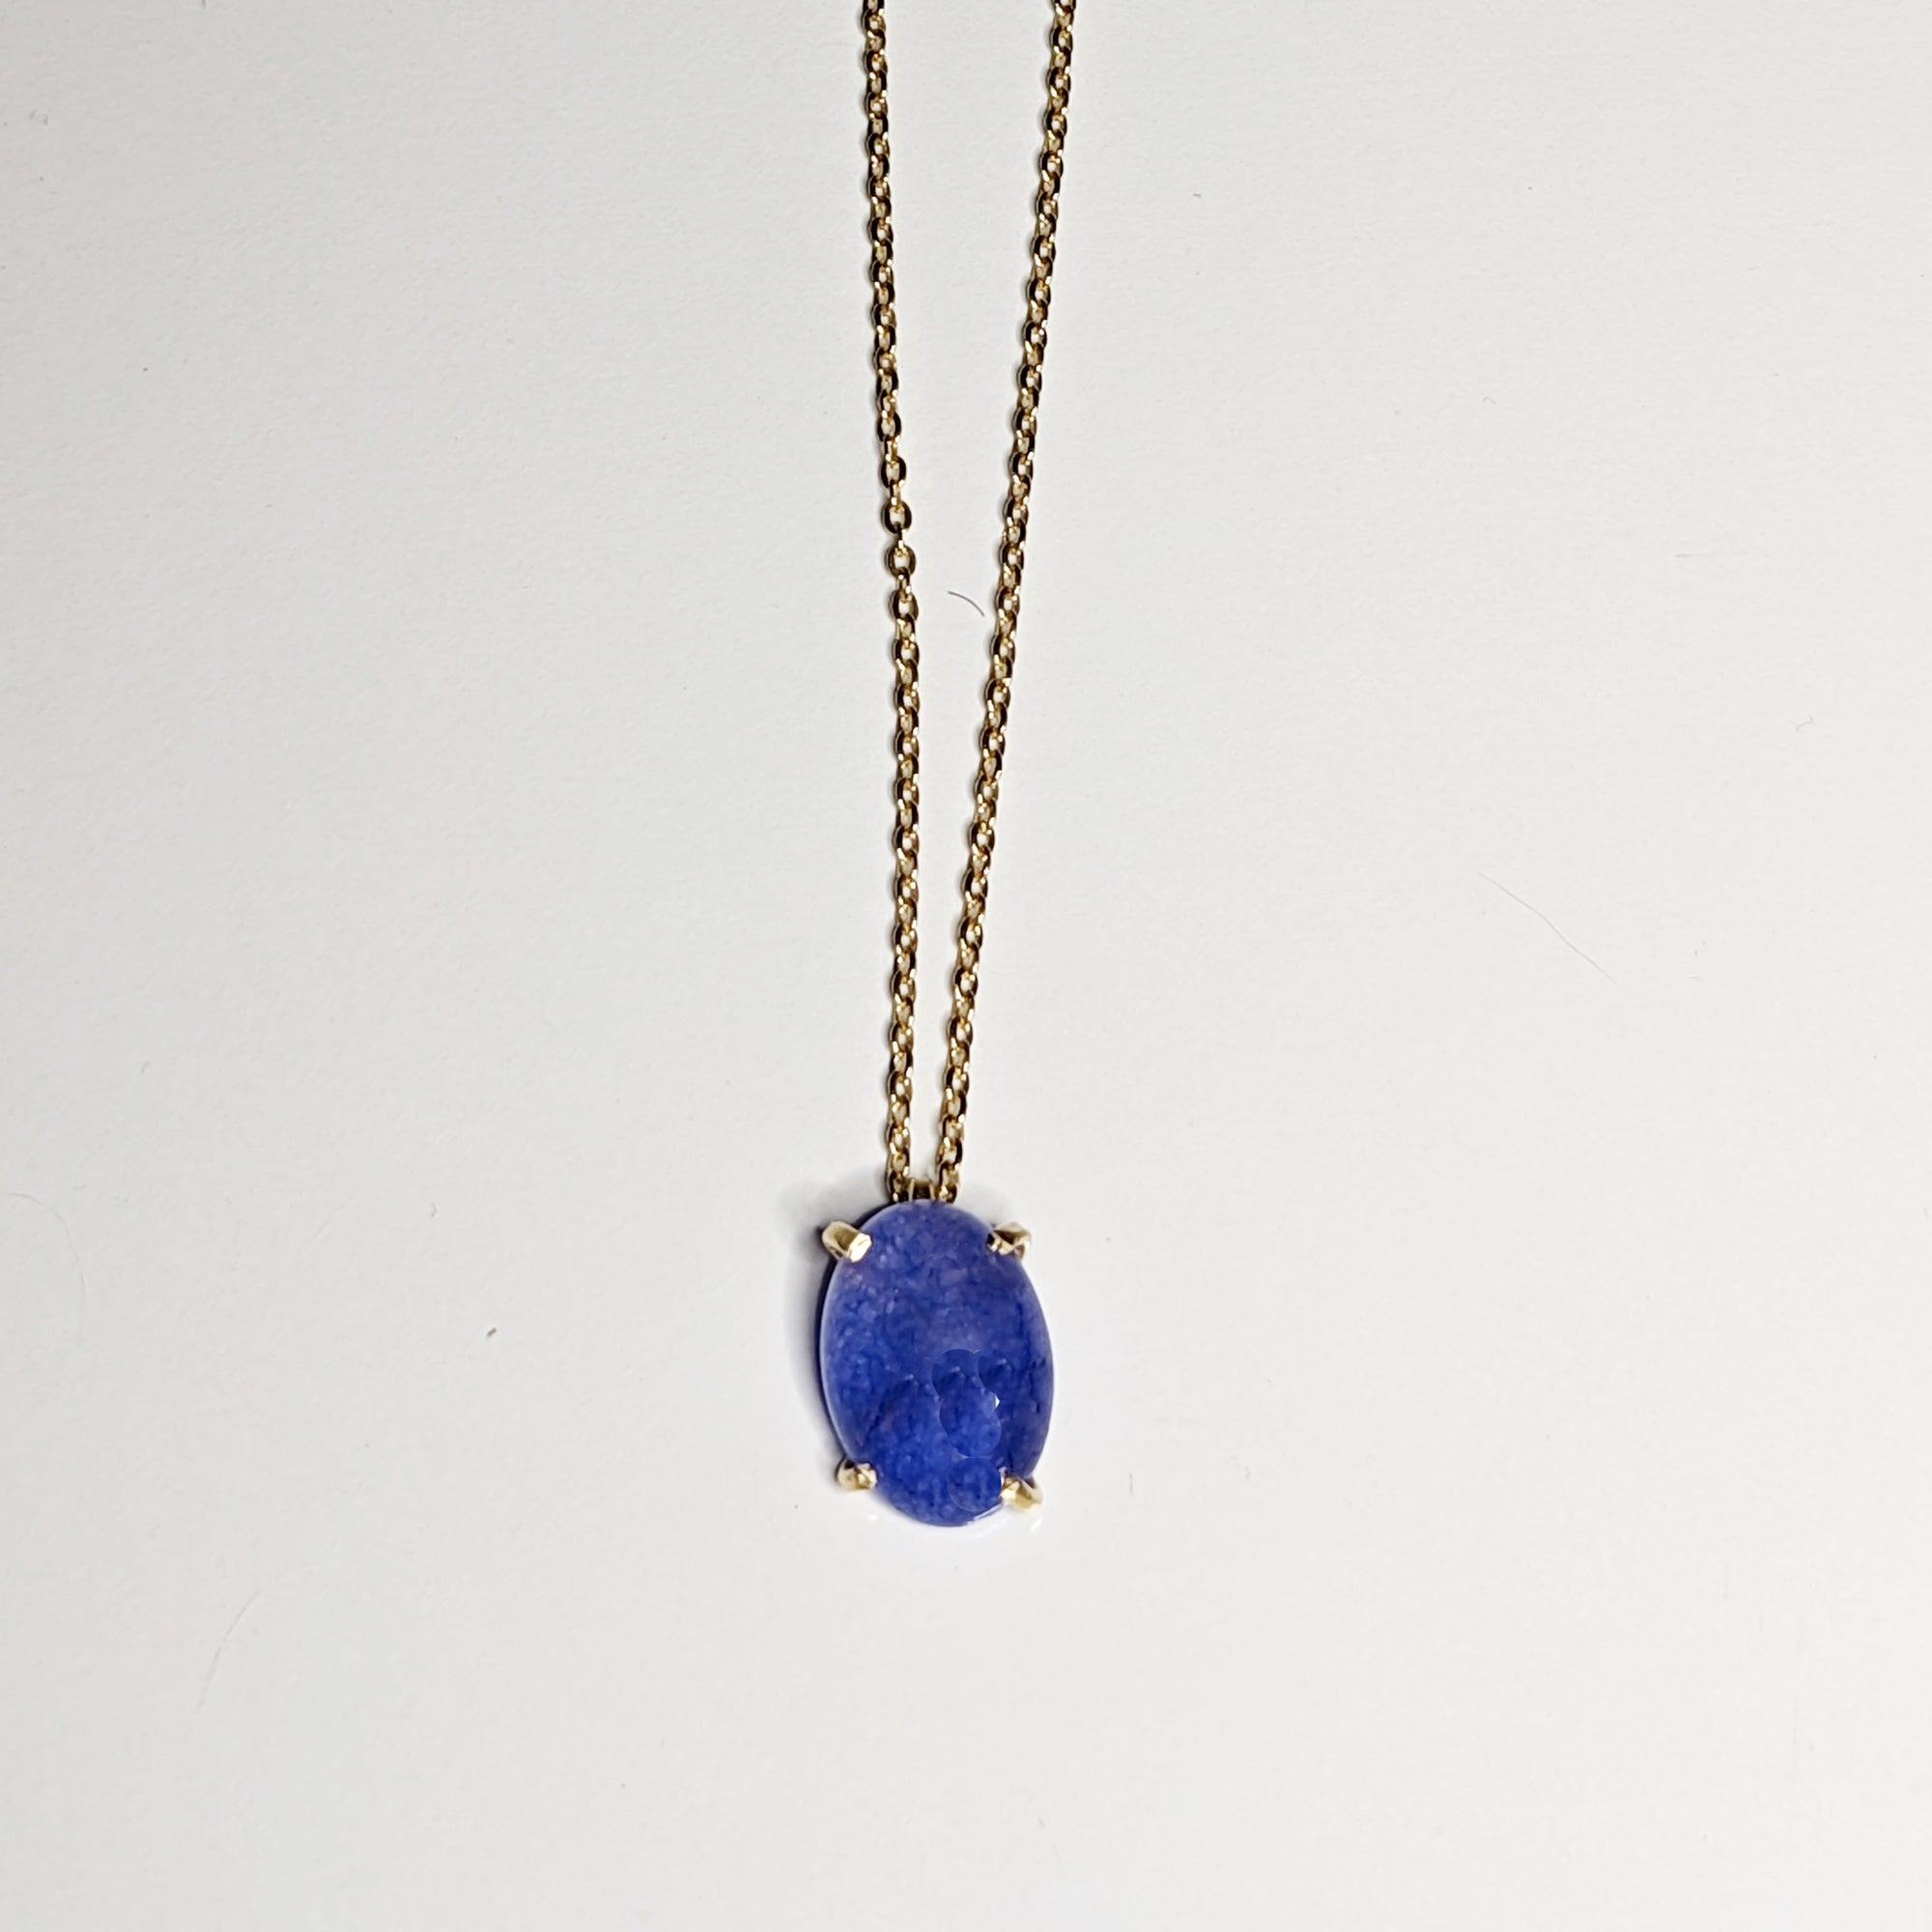 The Blue Jewel Necklace